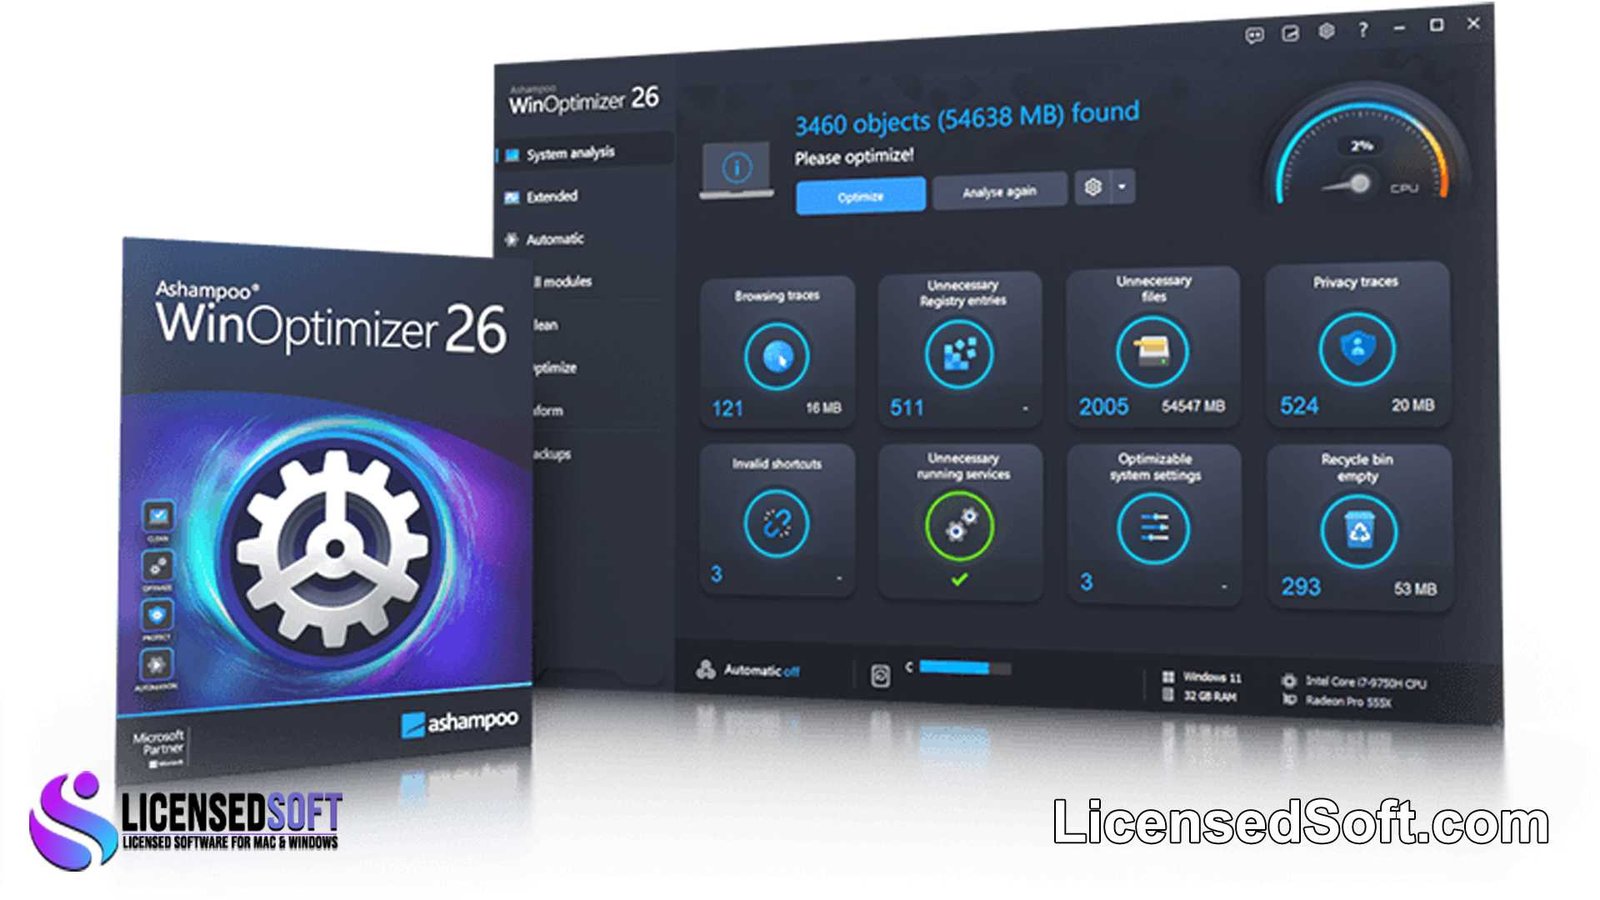 Ashampoo WinOptimizer 26 Perpetual License By LicensedSoft